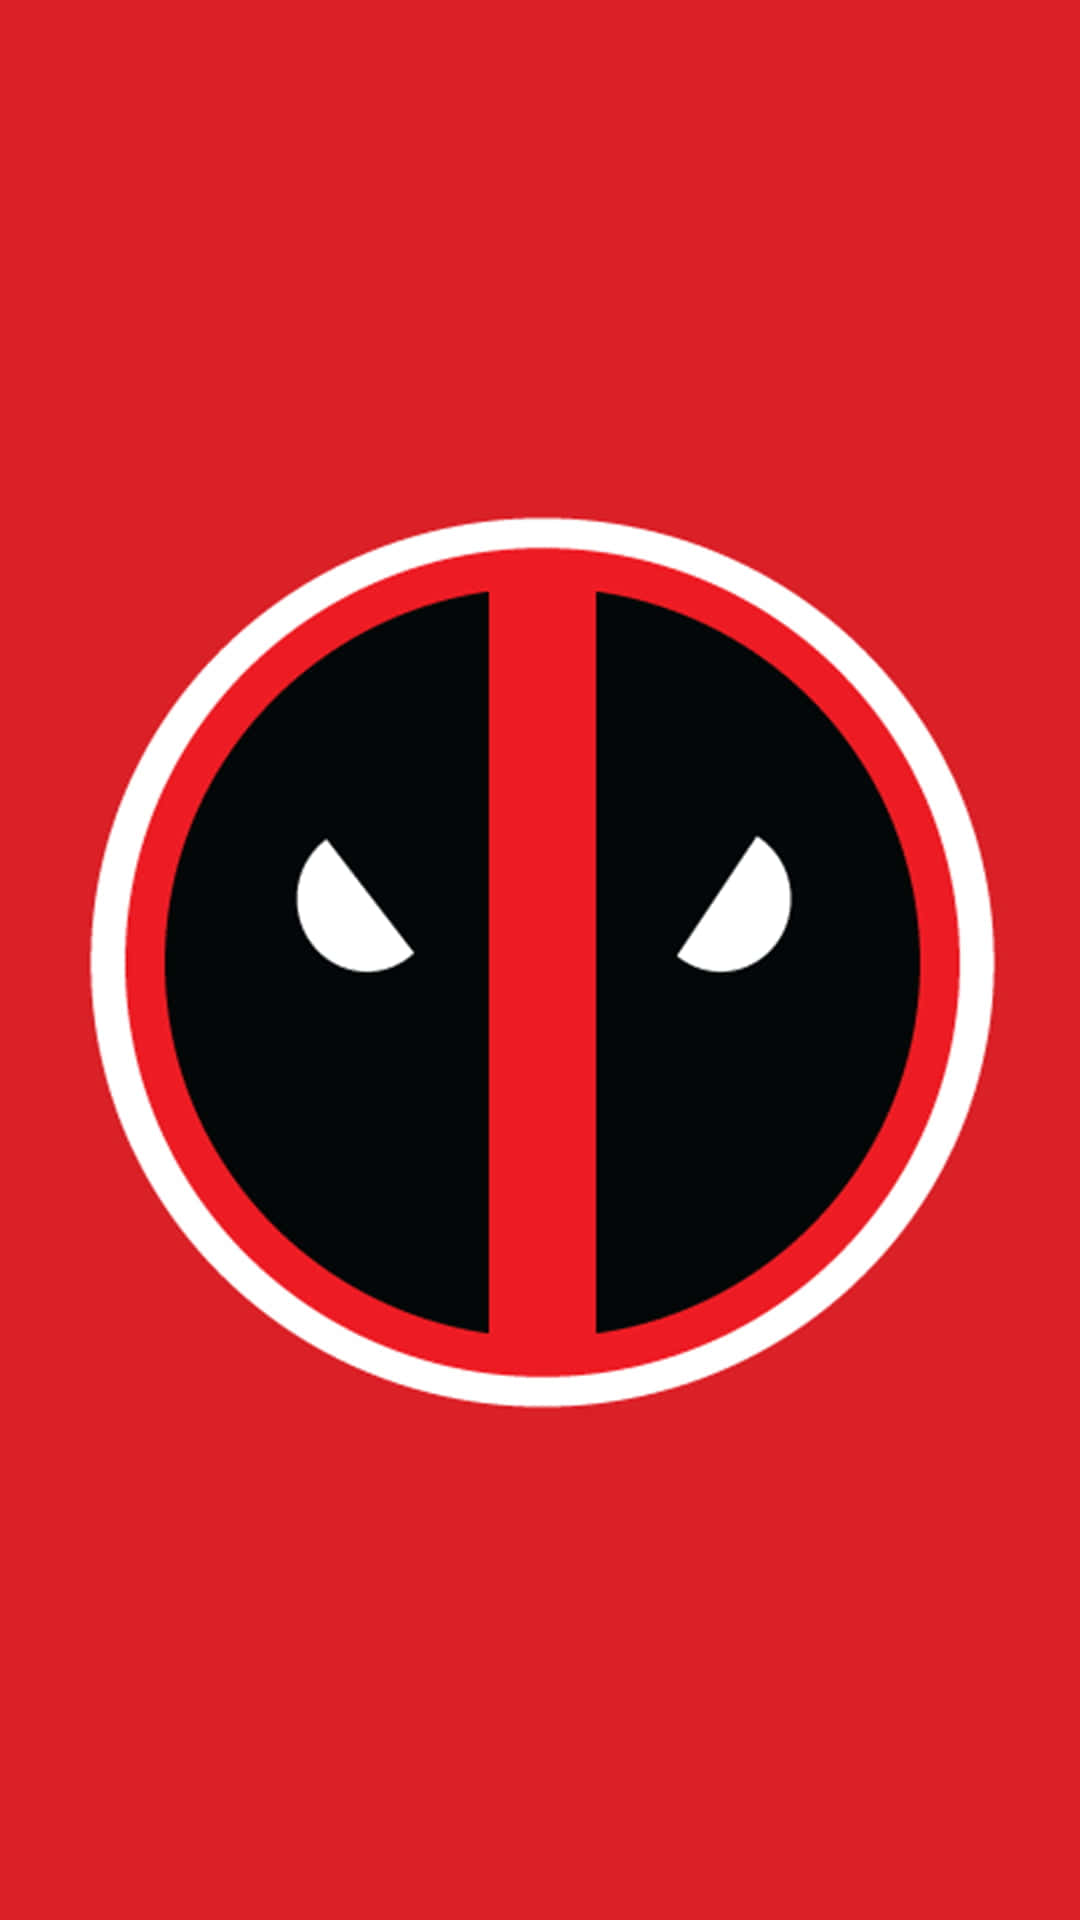 Logobrillante De Deadpool En Rojo Fondo de pantalla